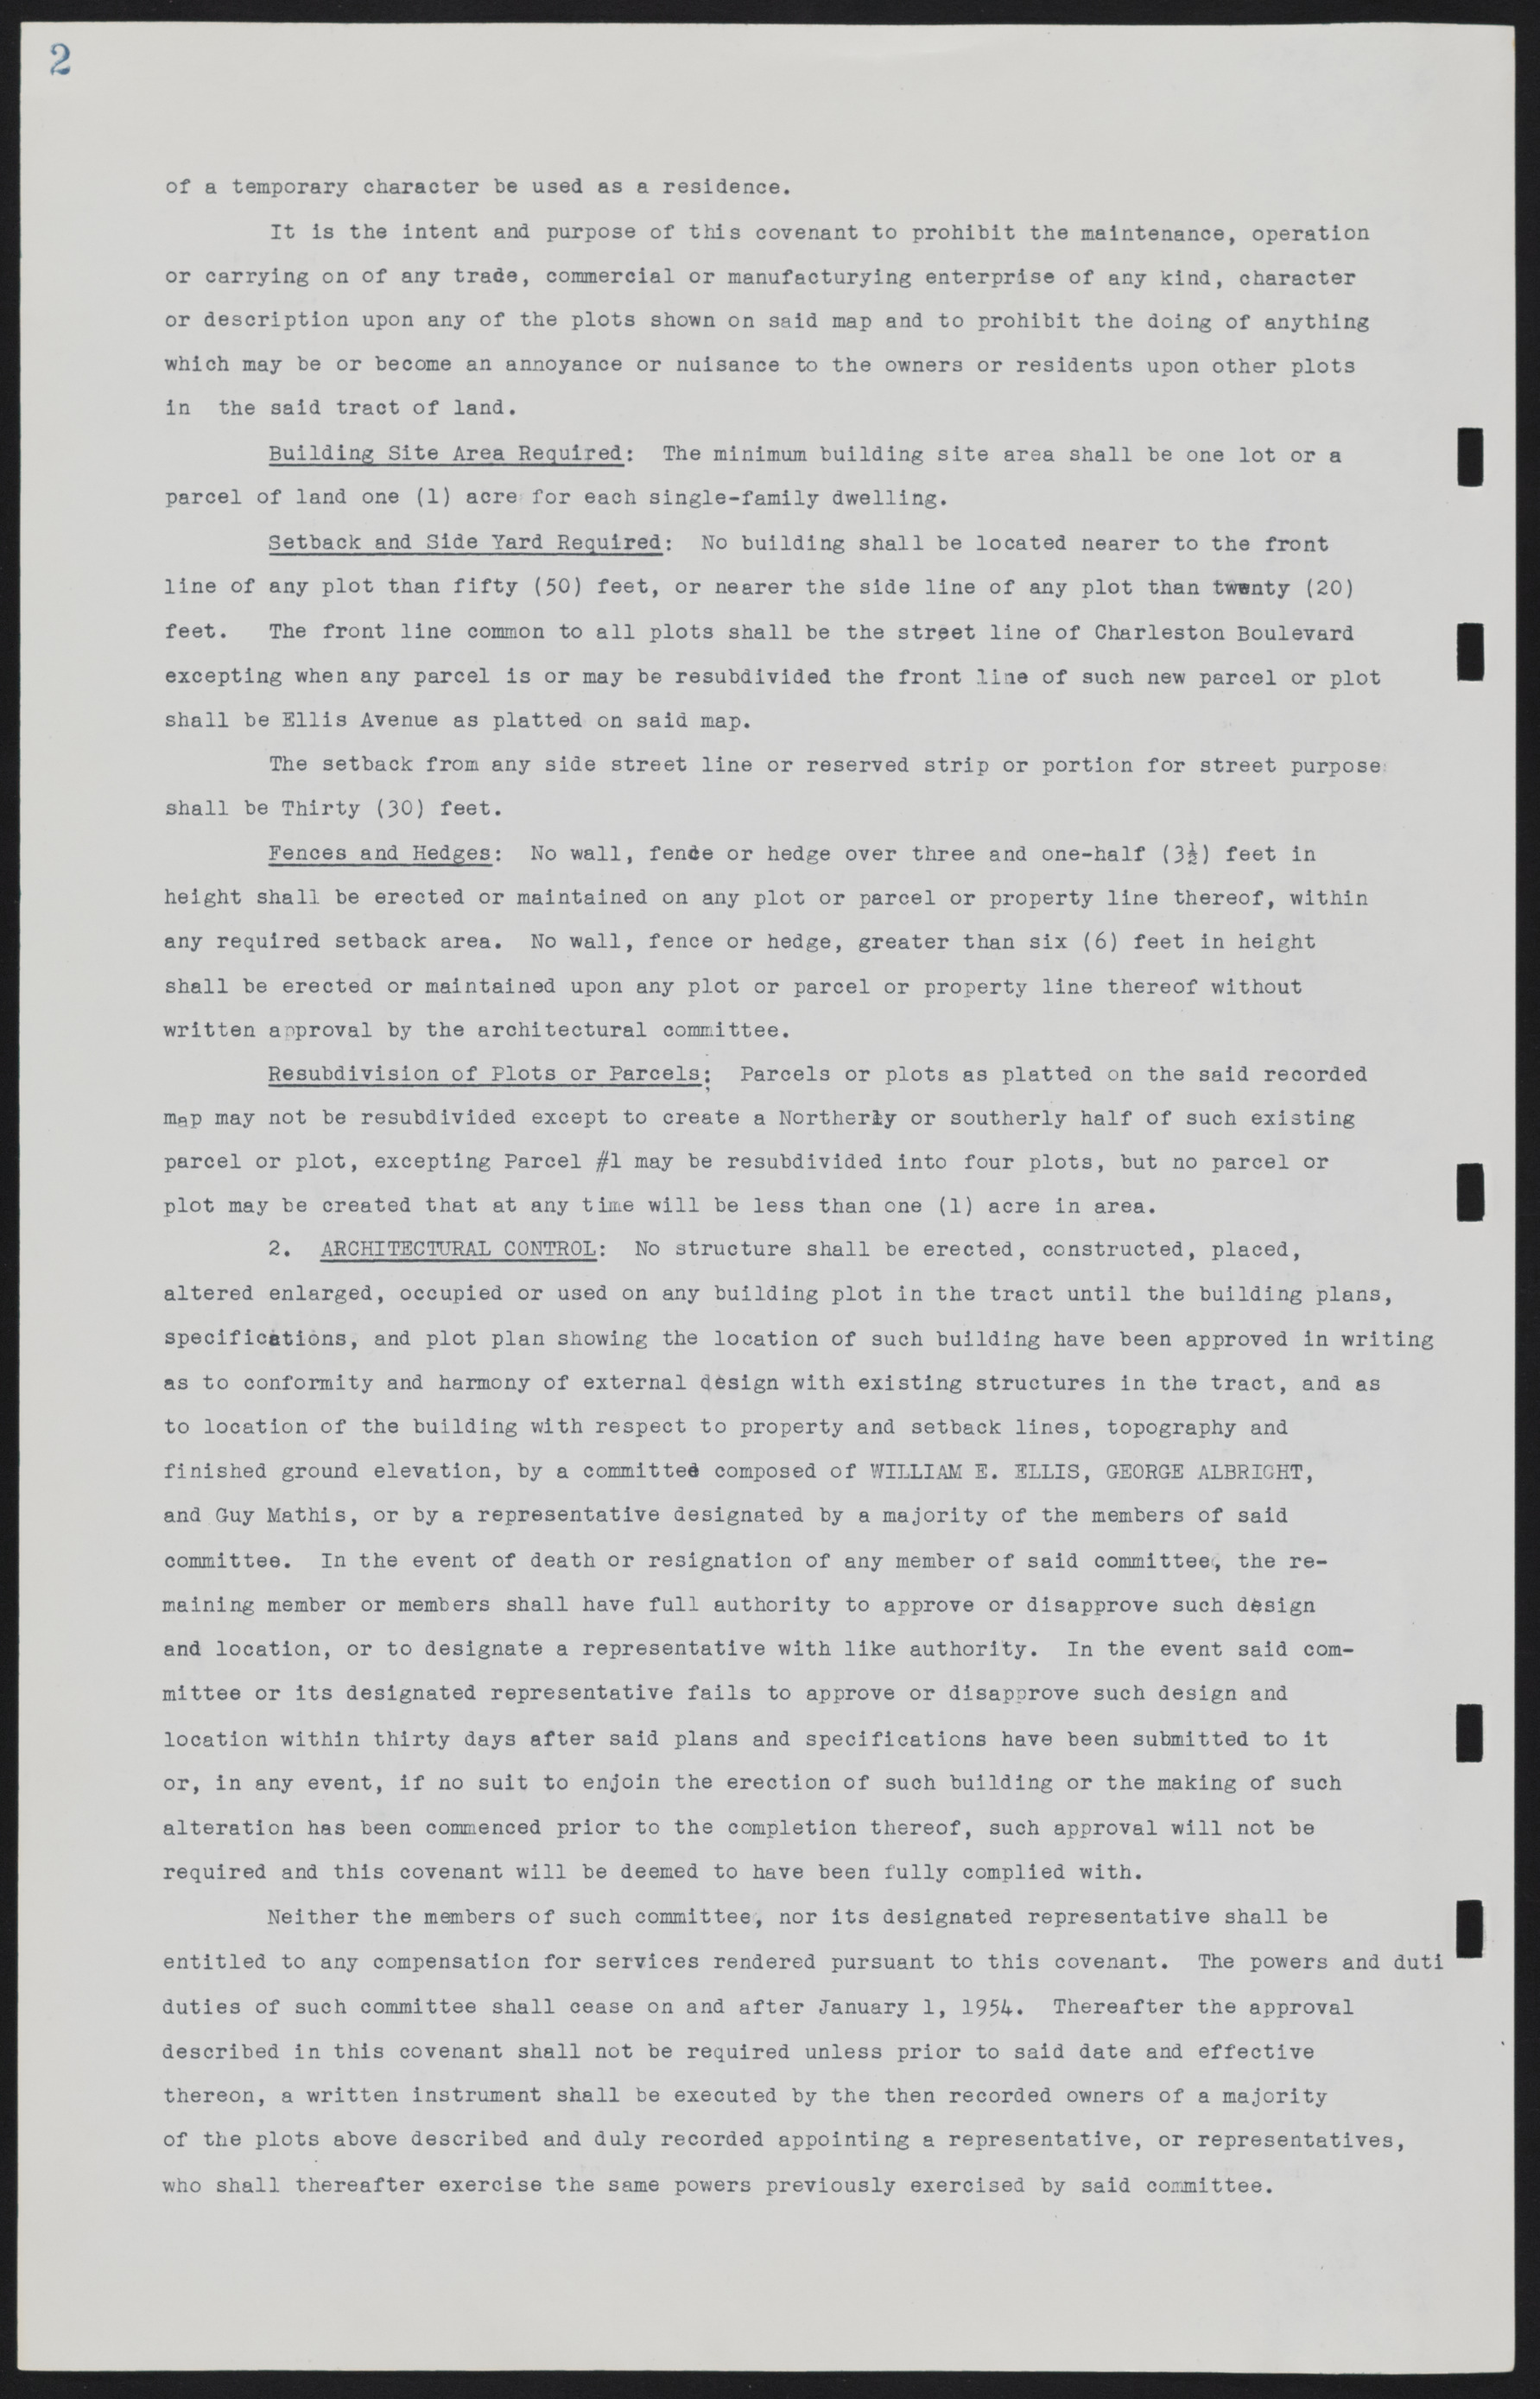 Las Vegas City Commission Legal Documents, February 29, 1944 to February 21, 1945, lvc000016-10